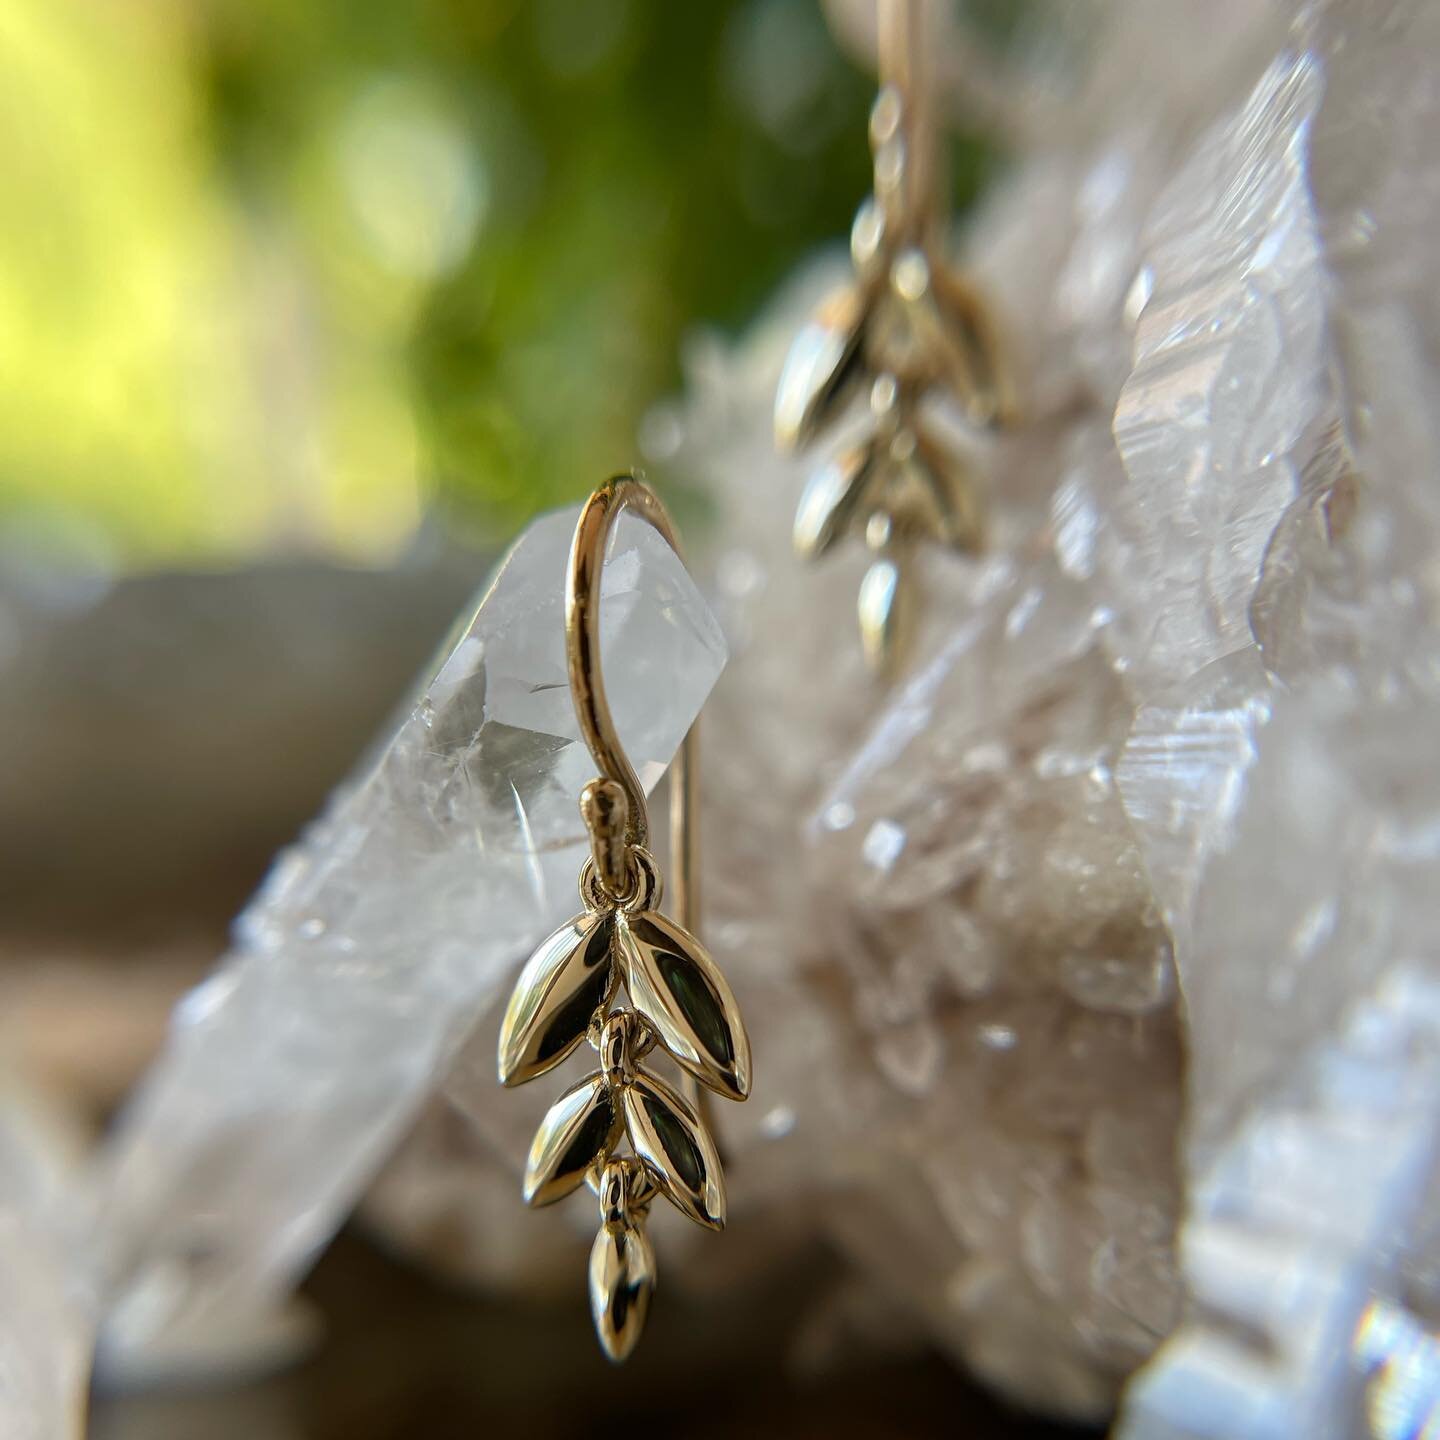 ✨ New Growth ✨
.
.
#magicaljewellery #finejewellery #australianmadejewellery #solidgold #leafearrings #botanicaljewellery #sydneyjewellerydesigner